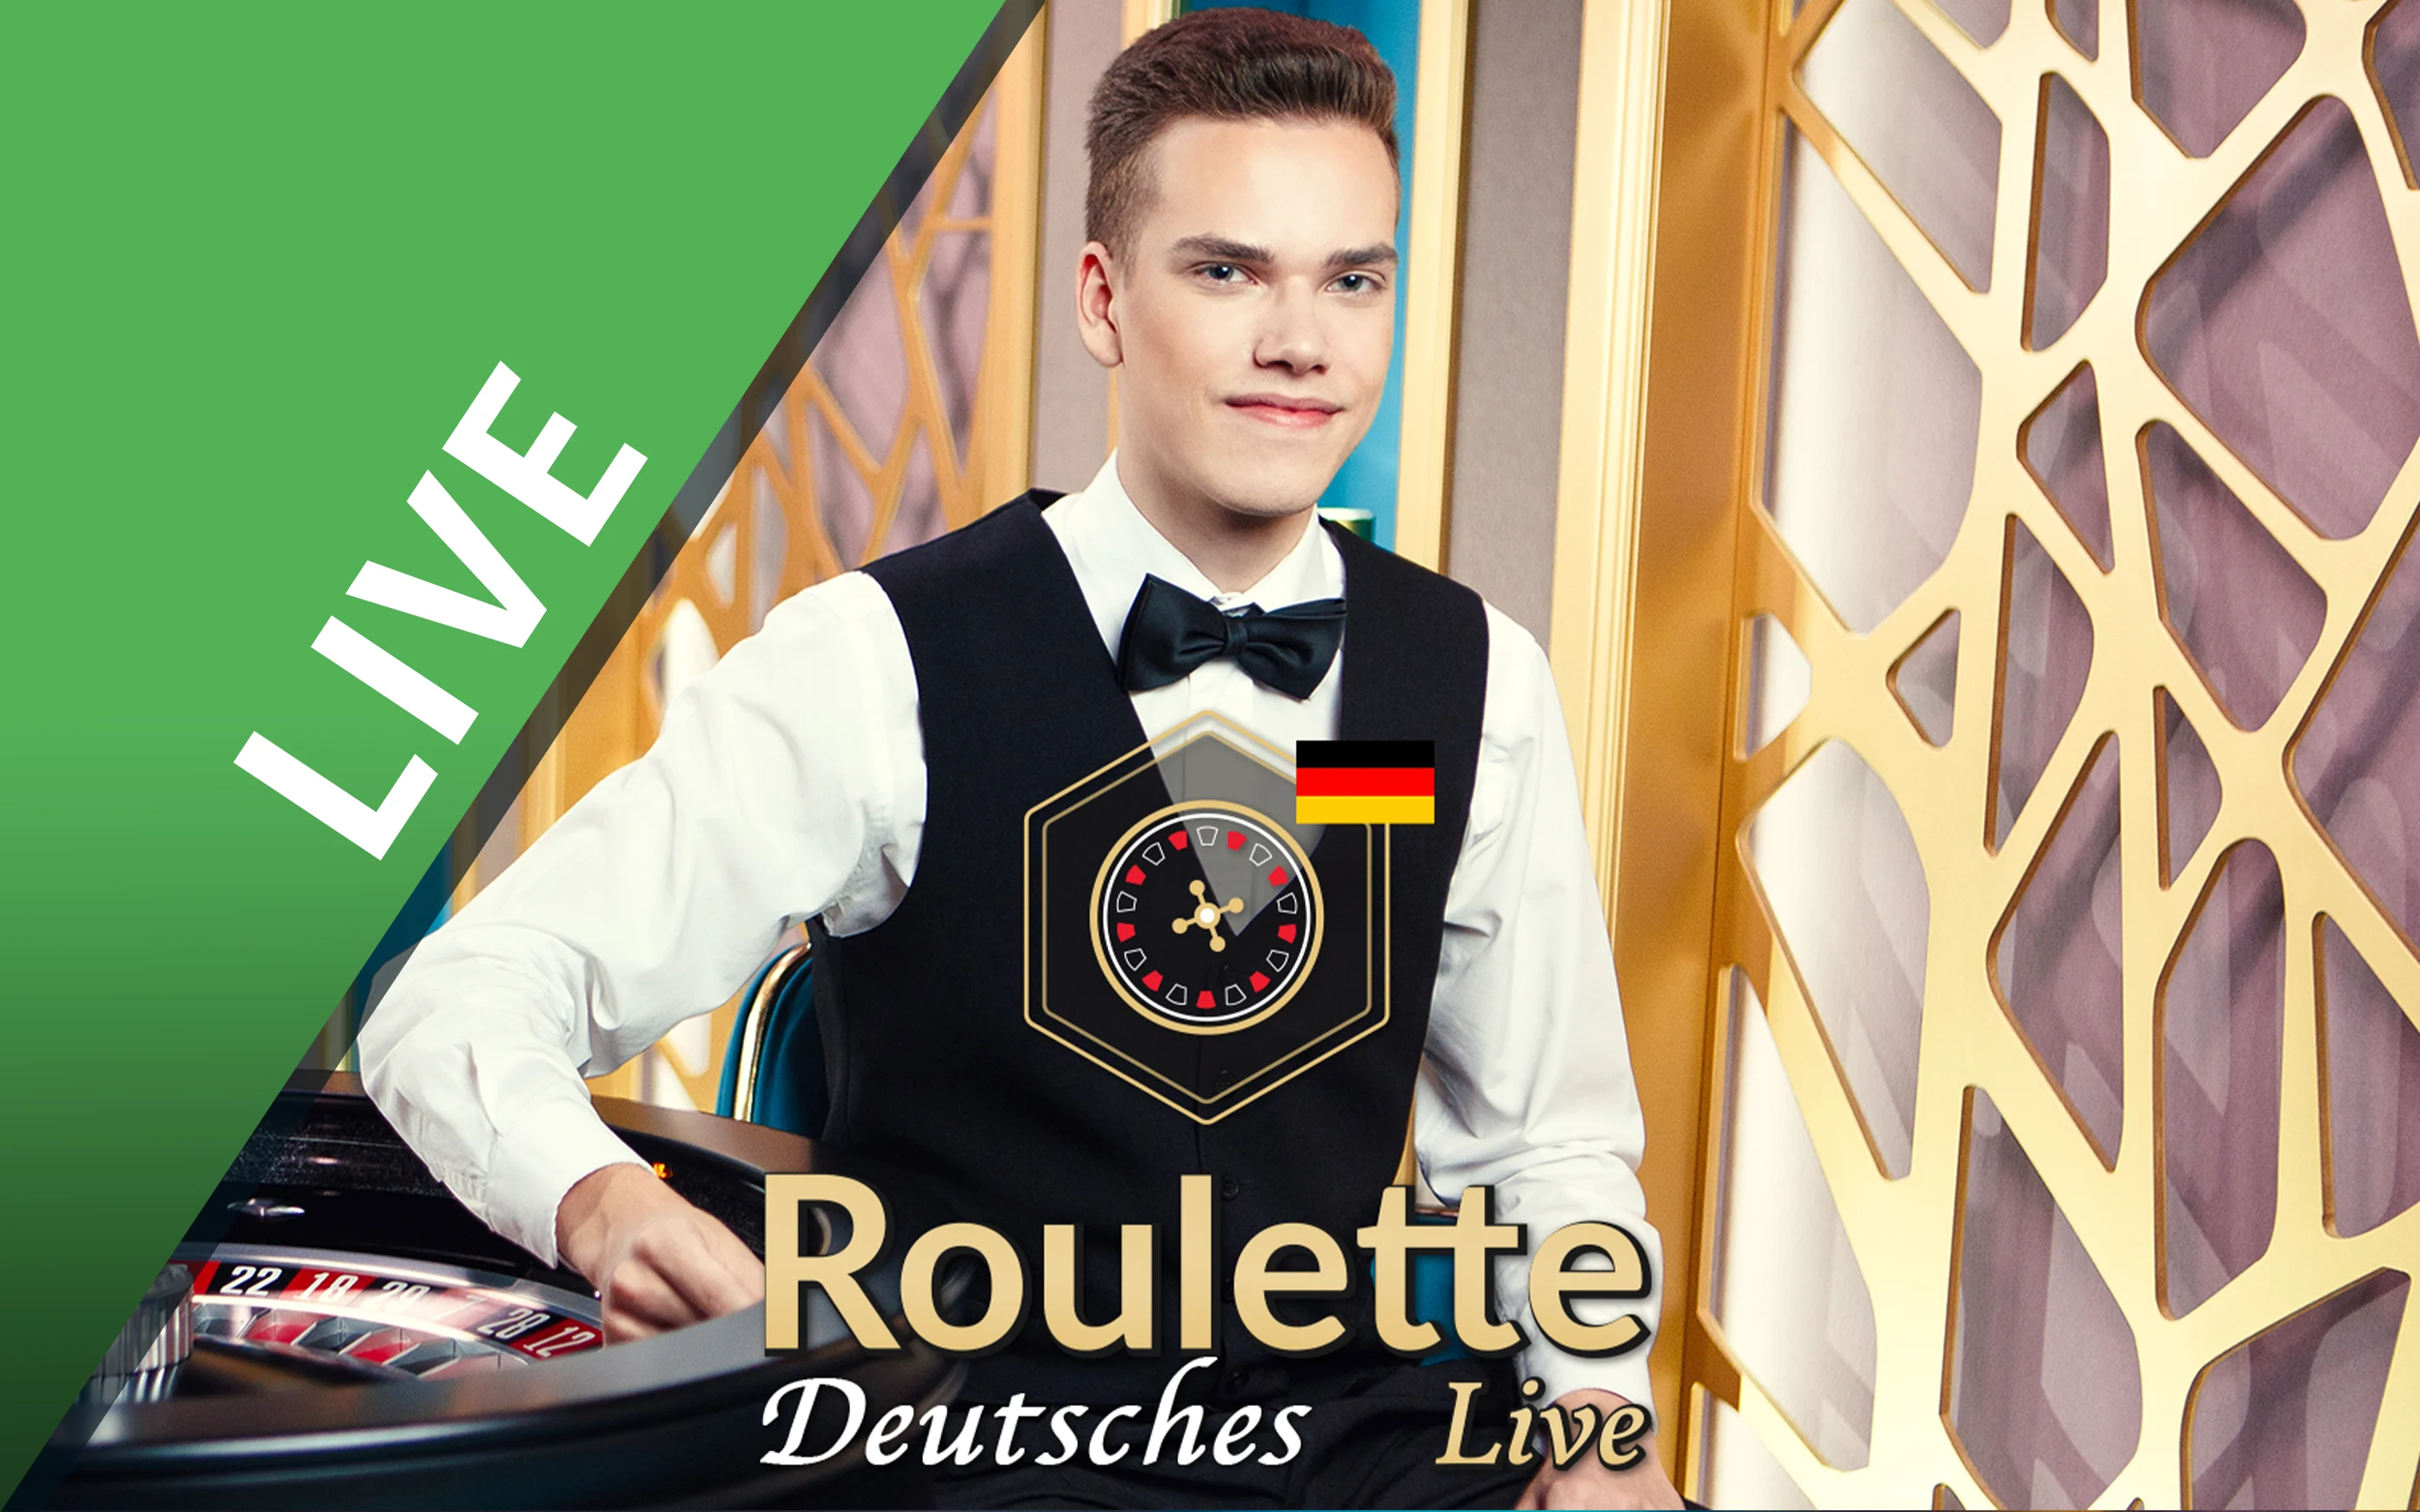 Spil Deutsches Roulette på Starcasino.be online kasino
